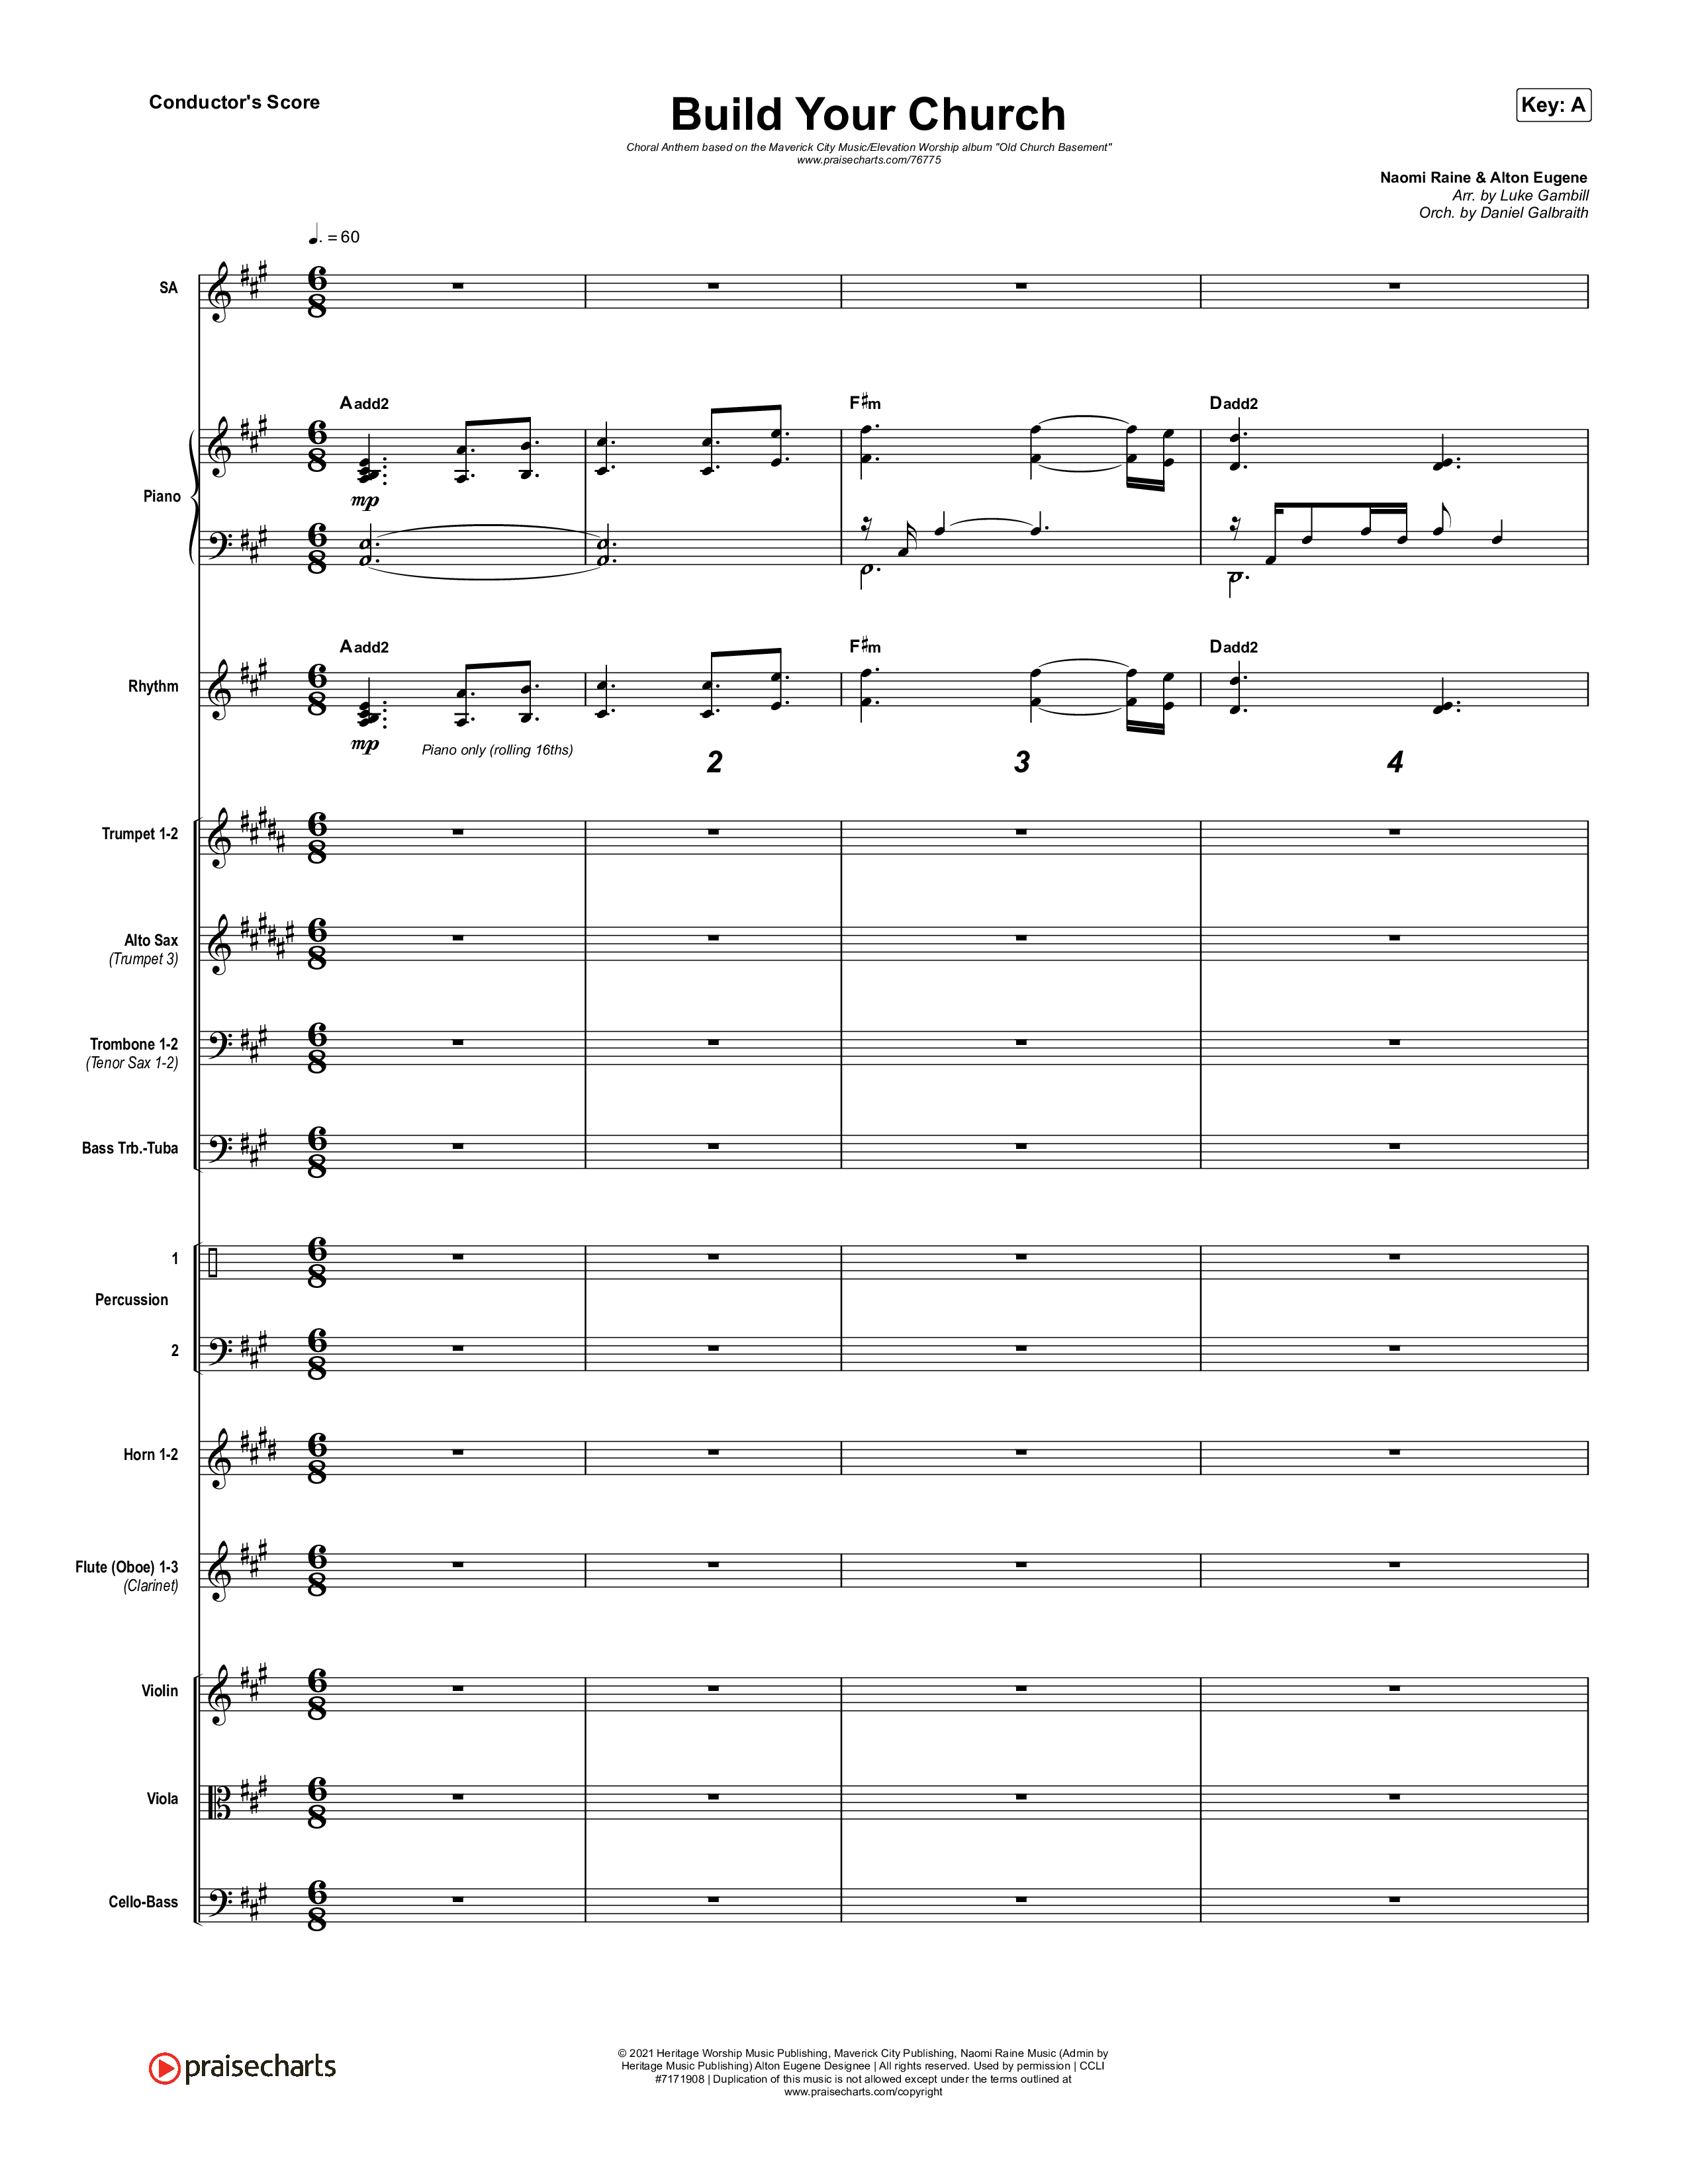 Build Your Church (Choral Anthem SATB) Orchestration (Maverick City Music / Elevation Worship / Arr. Luke Gambill)